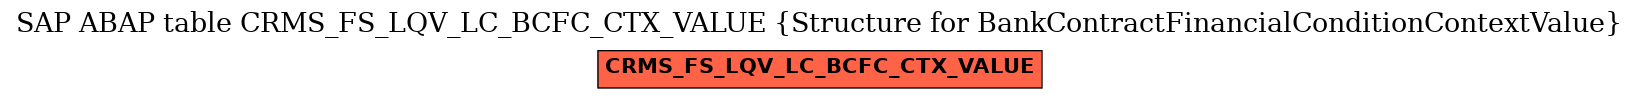 E-R Diagram for table CRMS_FS_LQV_LC_BCFC_CTX_VALUE (Structure for BankContractFinancialConditionContextValue)